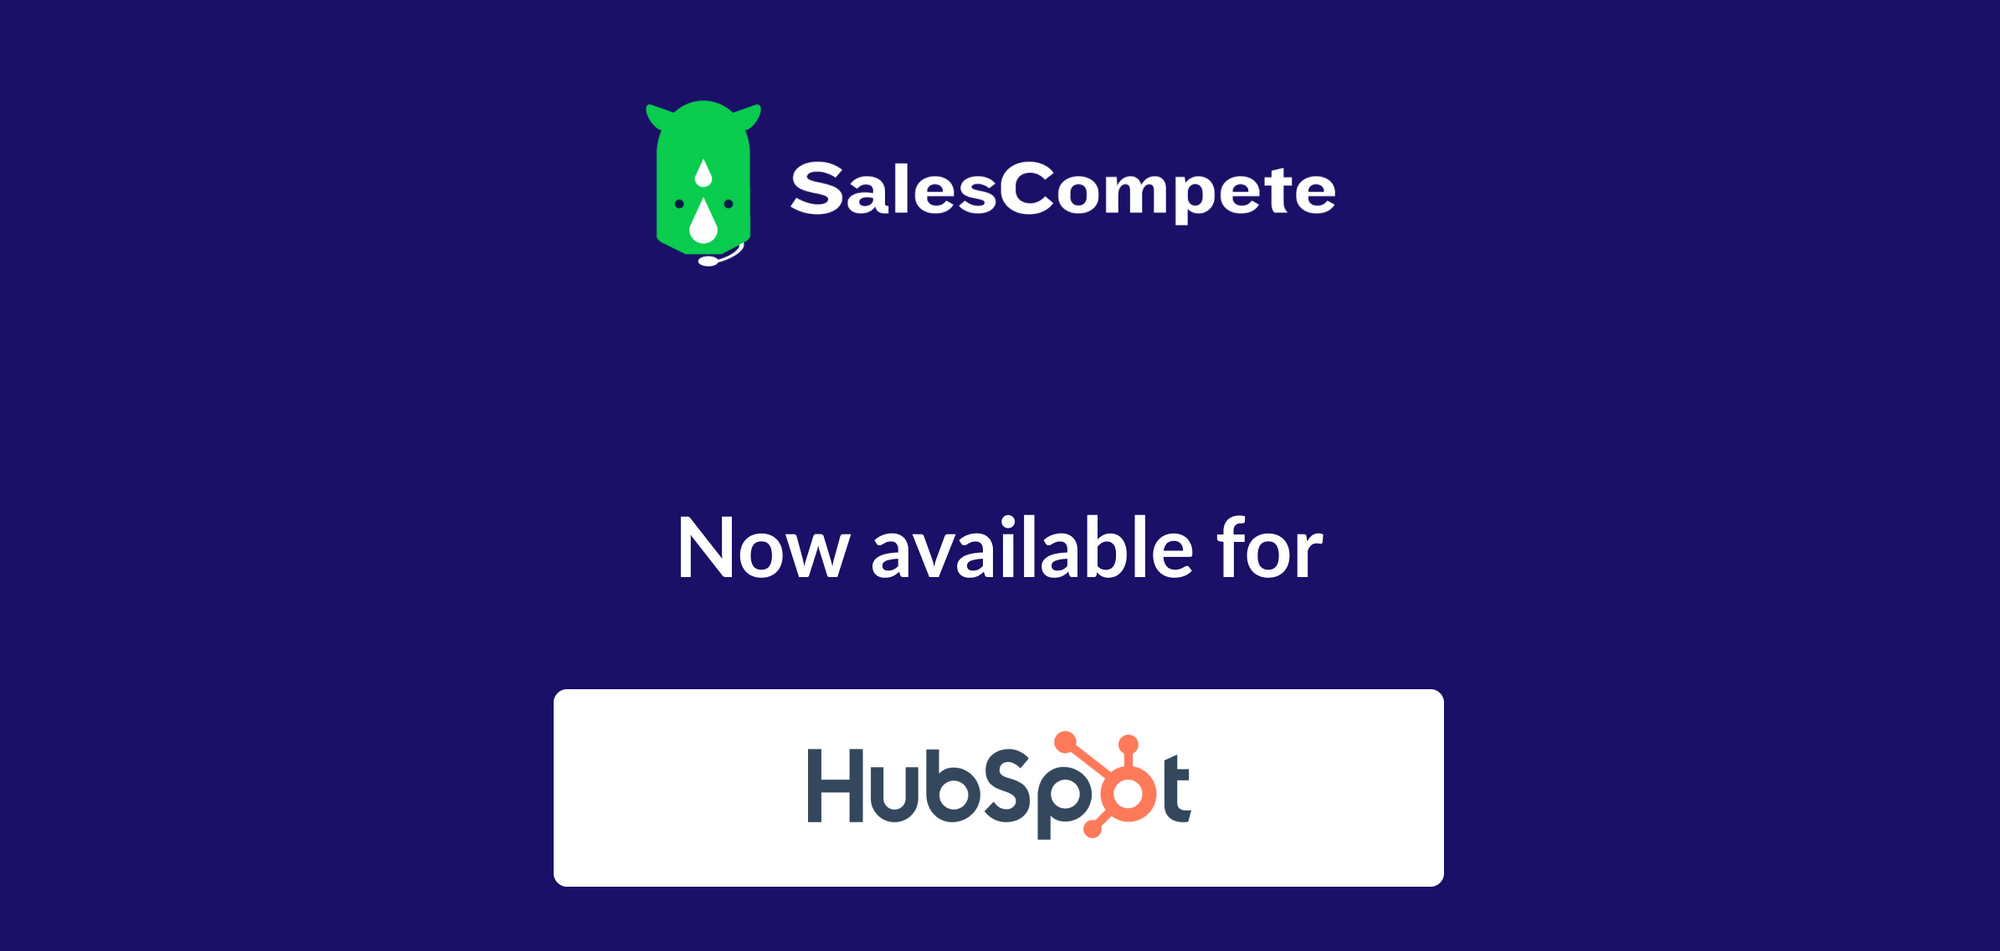 Hubspot Gamification For Slack: Sales Leaderboards and Gamification Features for HubSpot (inside Slack)